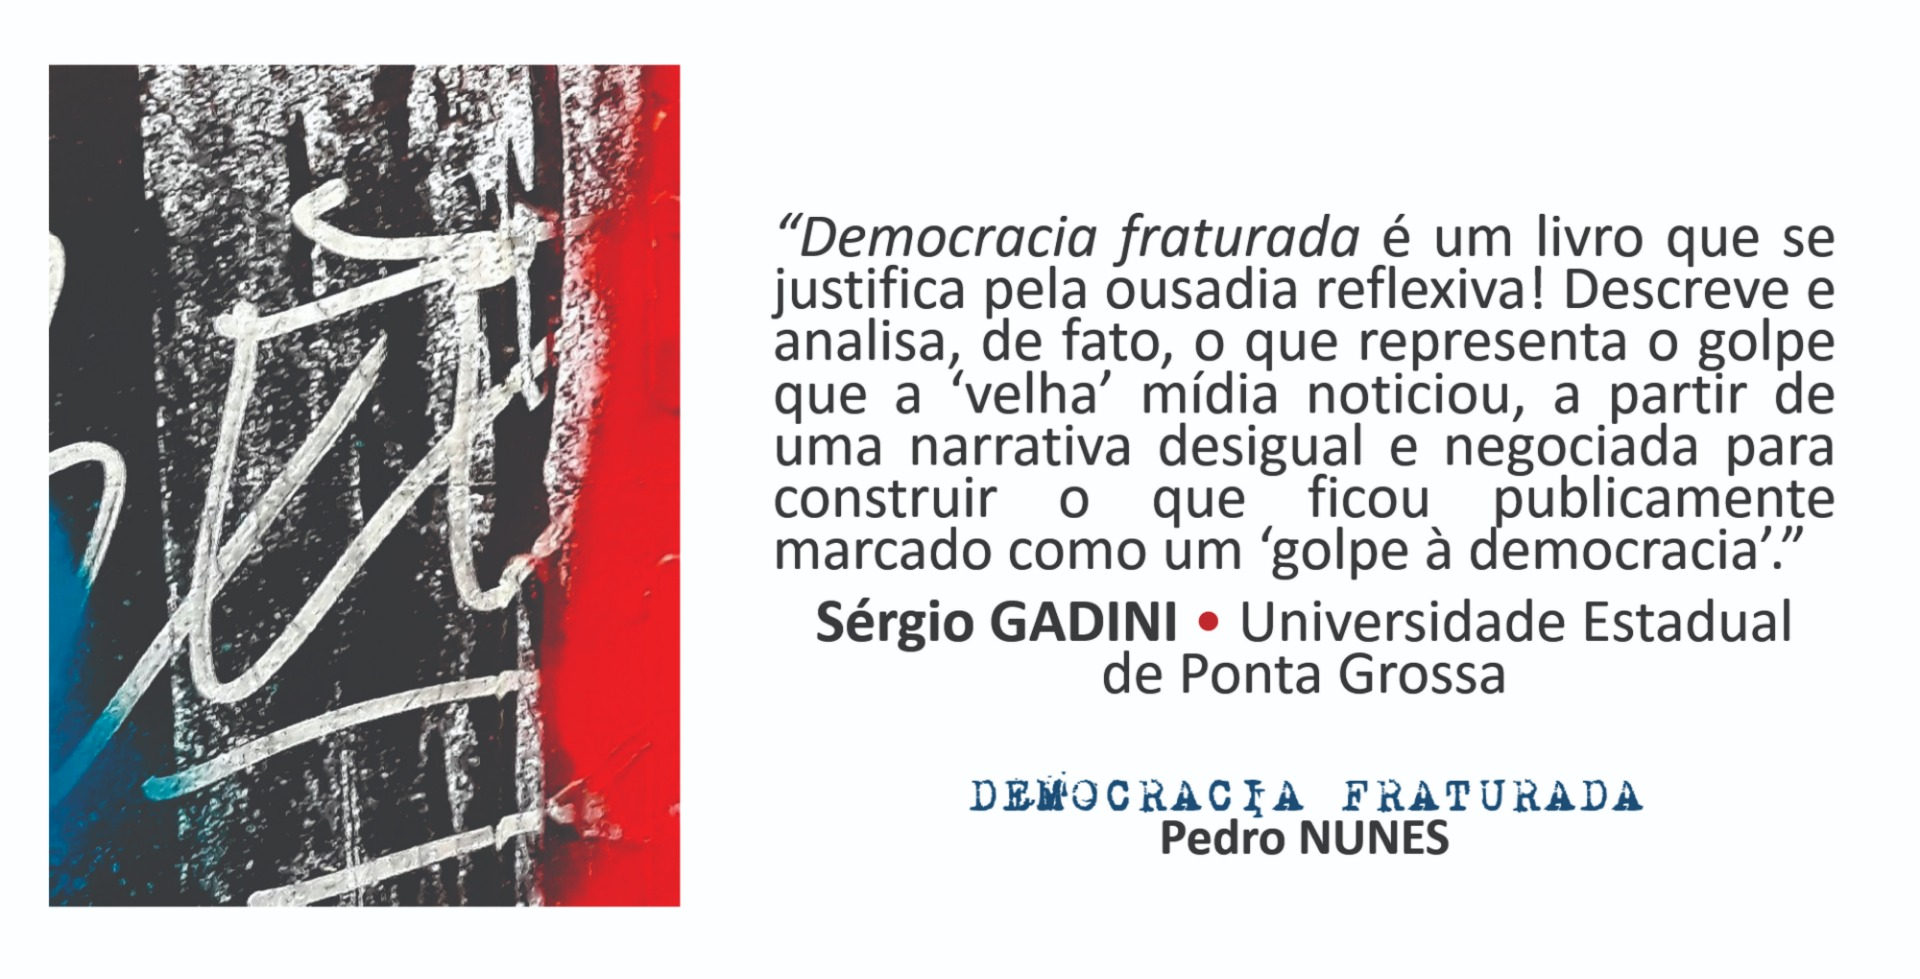 CITA_Gadini_DemocraciaFraturada.jpg